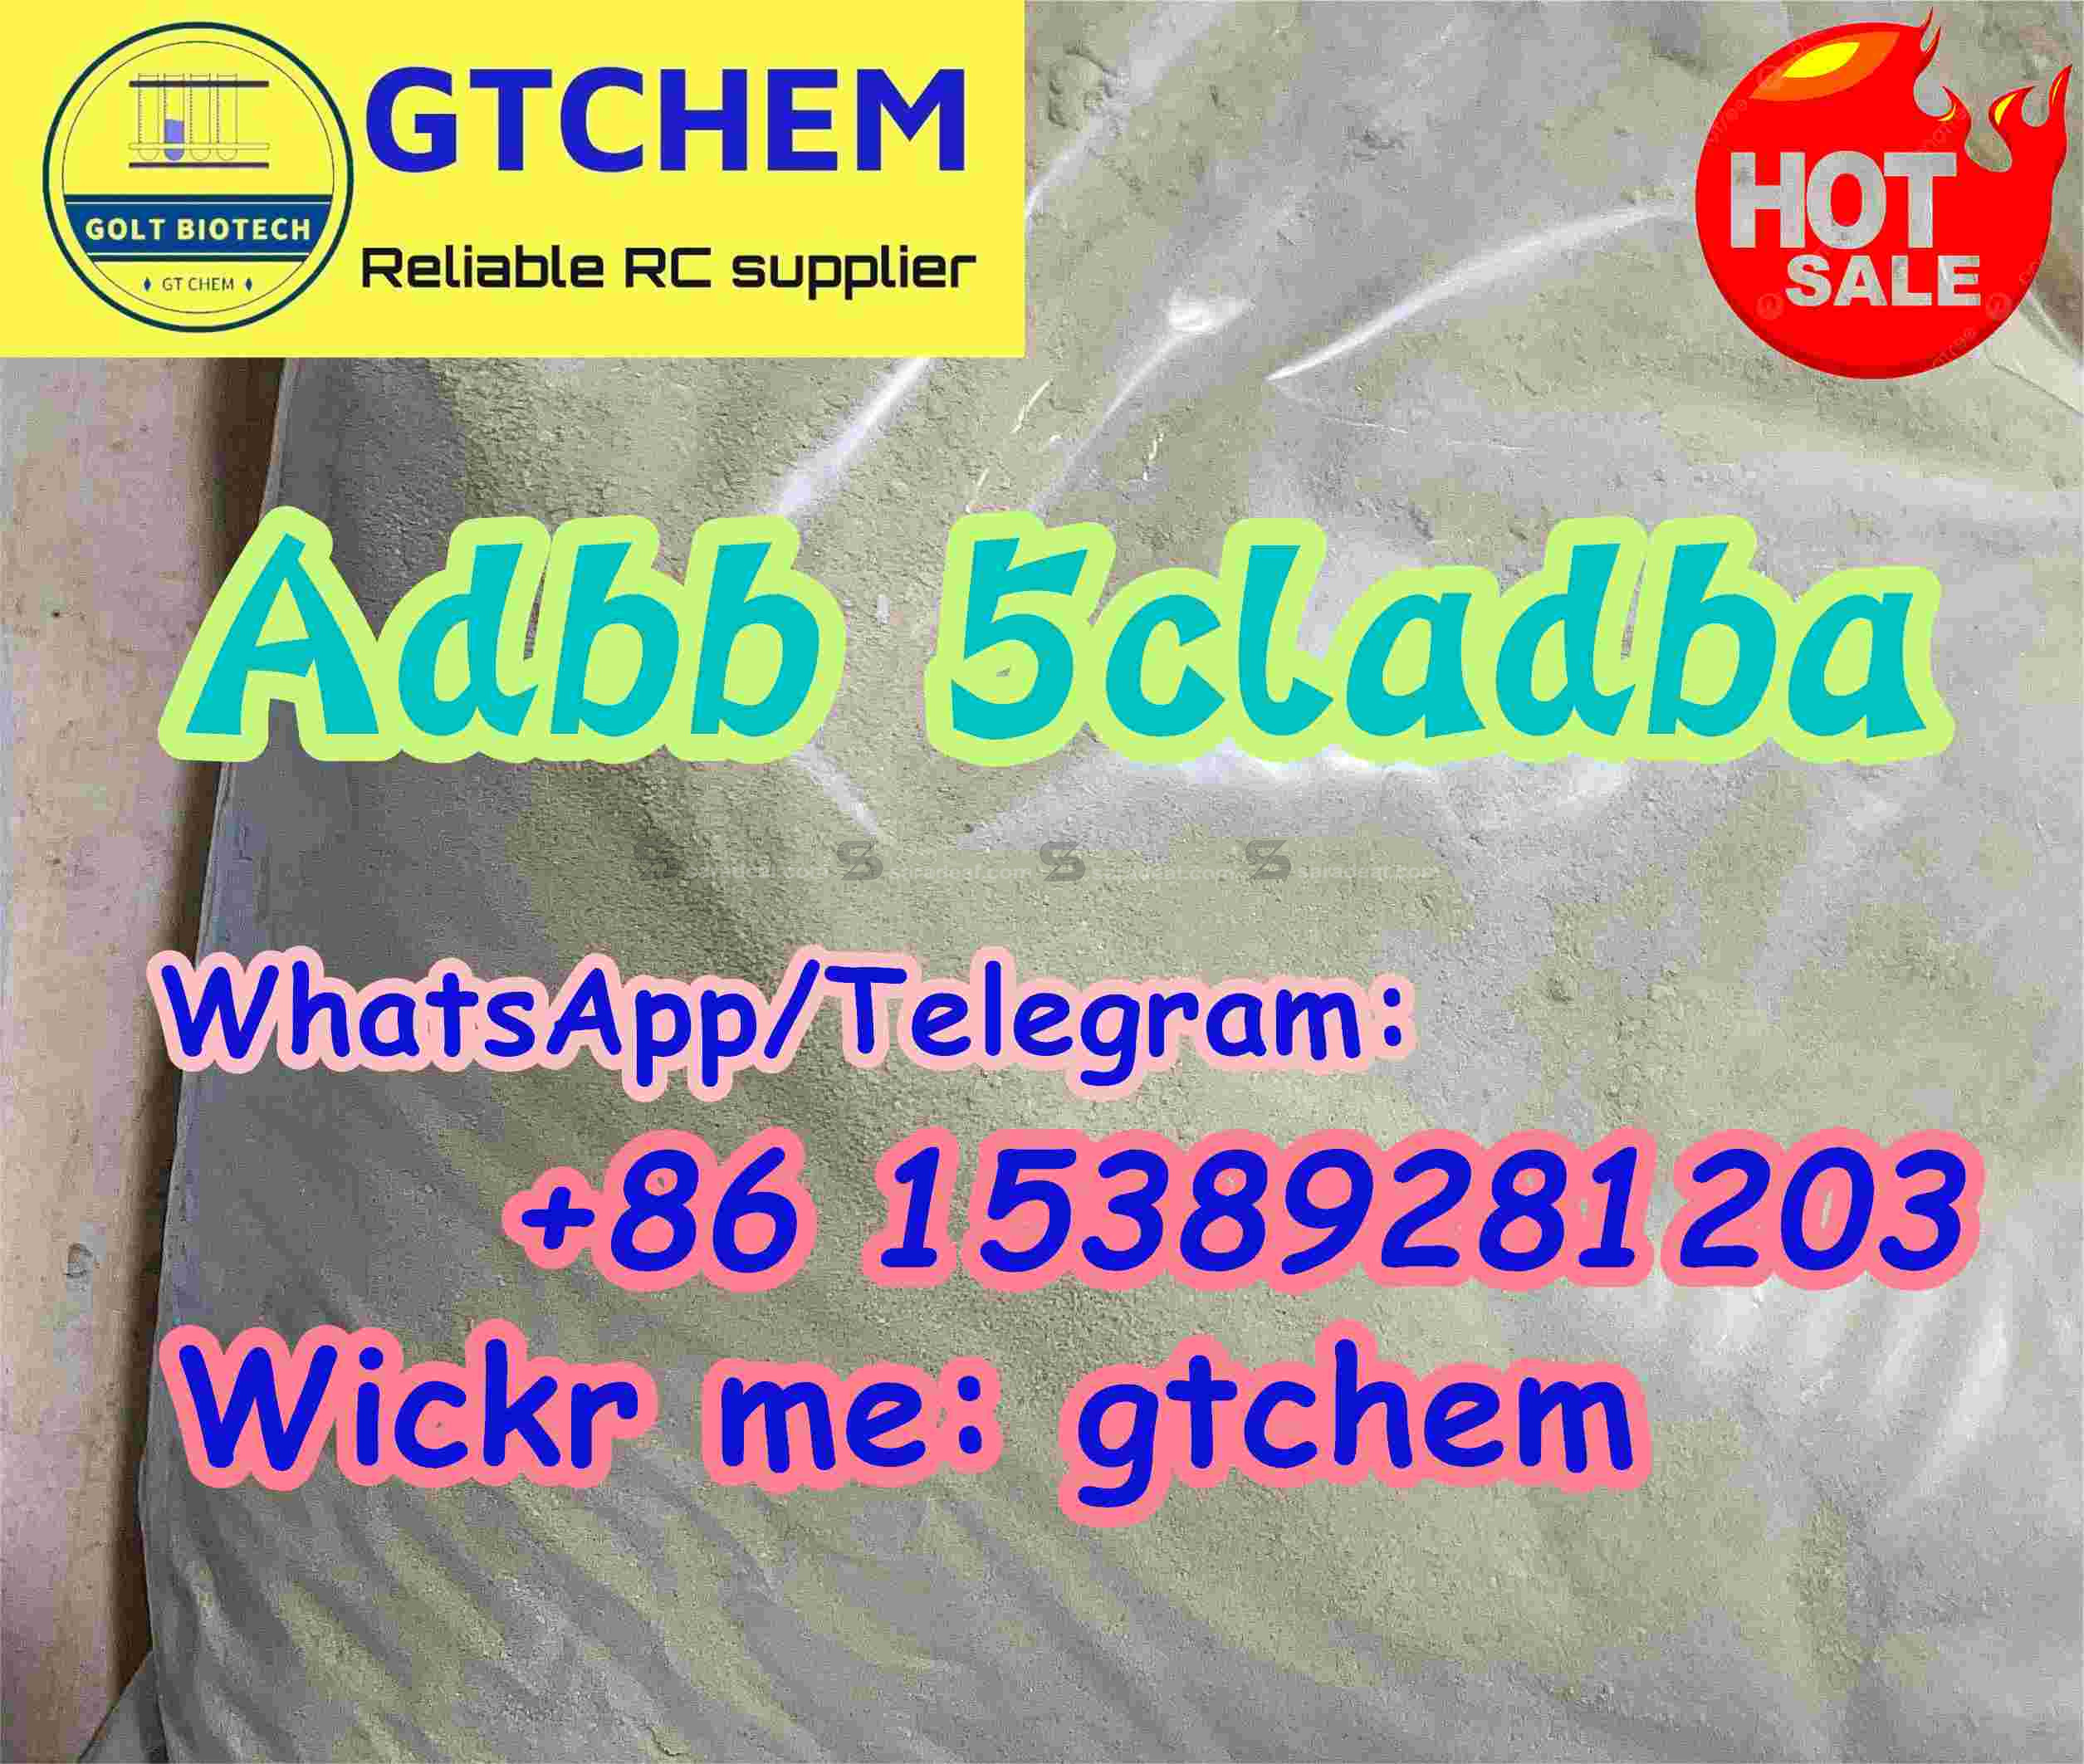 ADBB 5cladba buy 6c adbb powder 5cl ADBB precursor